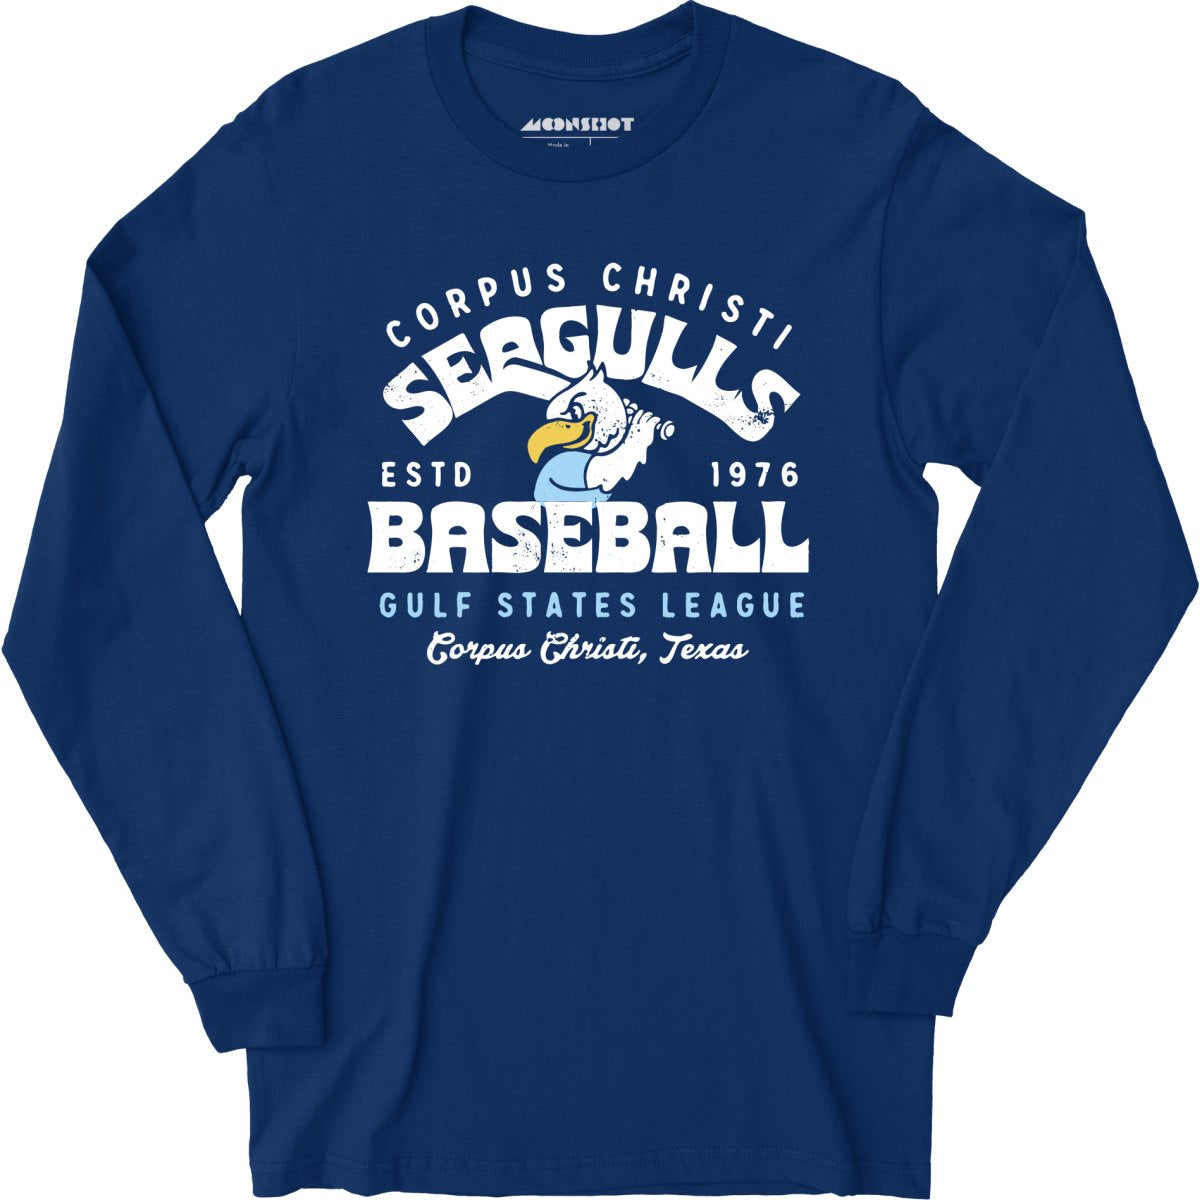 Corpus Christi Seagulls - Texas - Vintage Defunct Baseball Teams - Long Sleeve T-Shirt